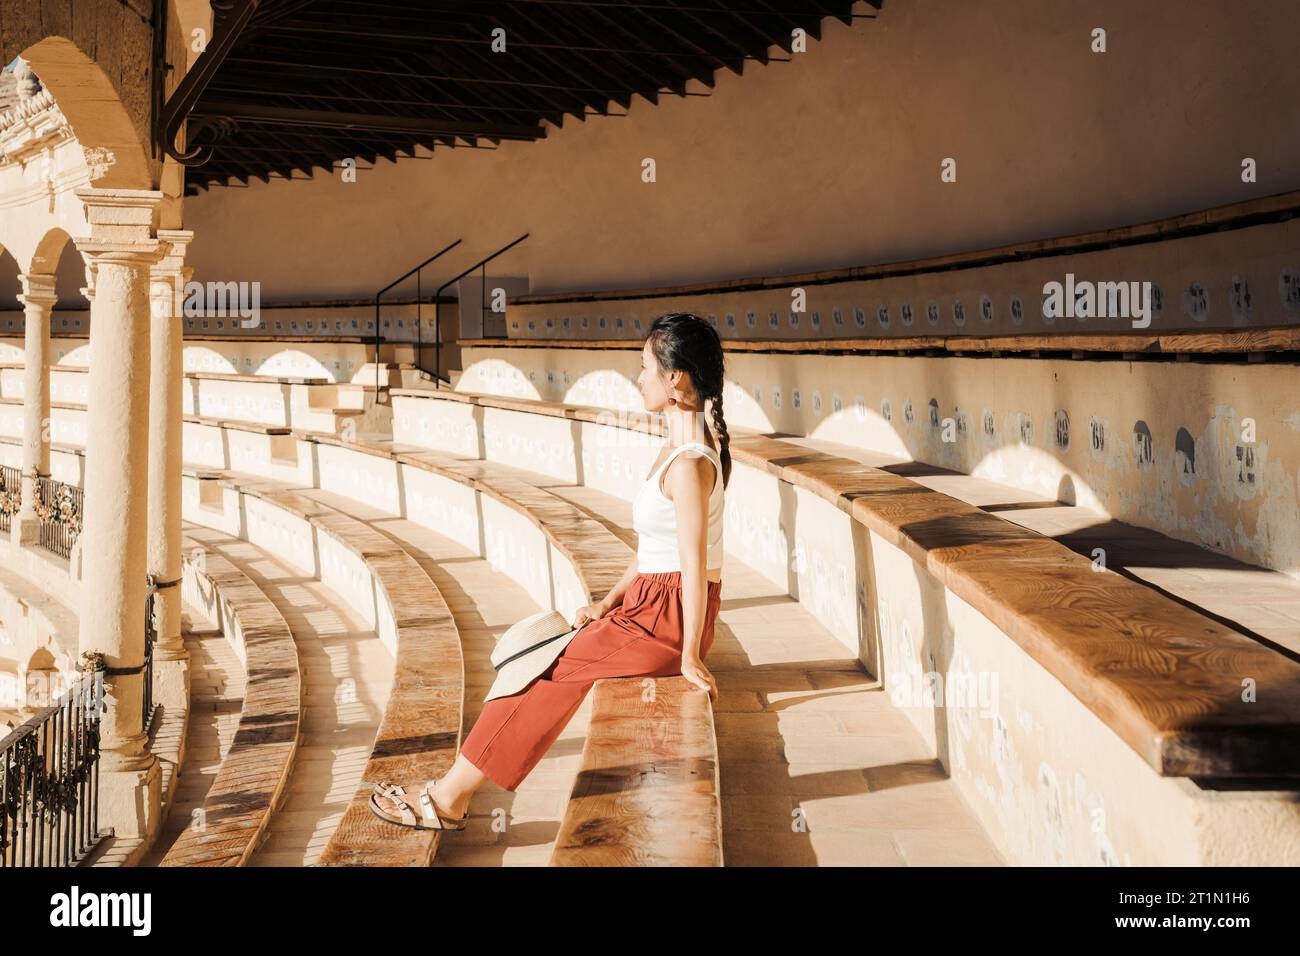 A woman sitting on the seat in the Plaza de Toros de Ronda, a historic Bullring in Ronda, Spain Stock Photo